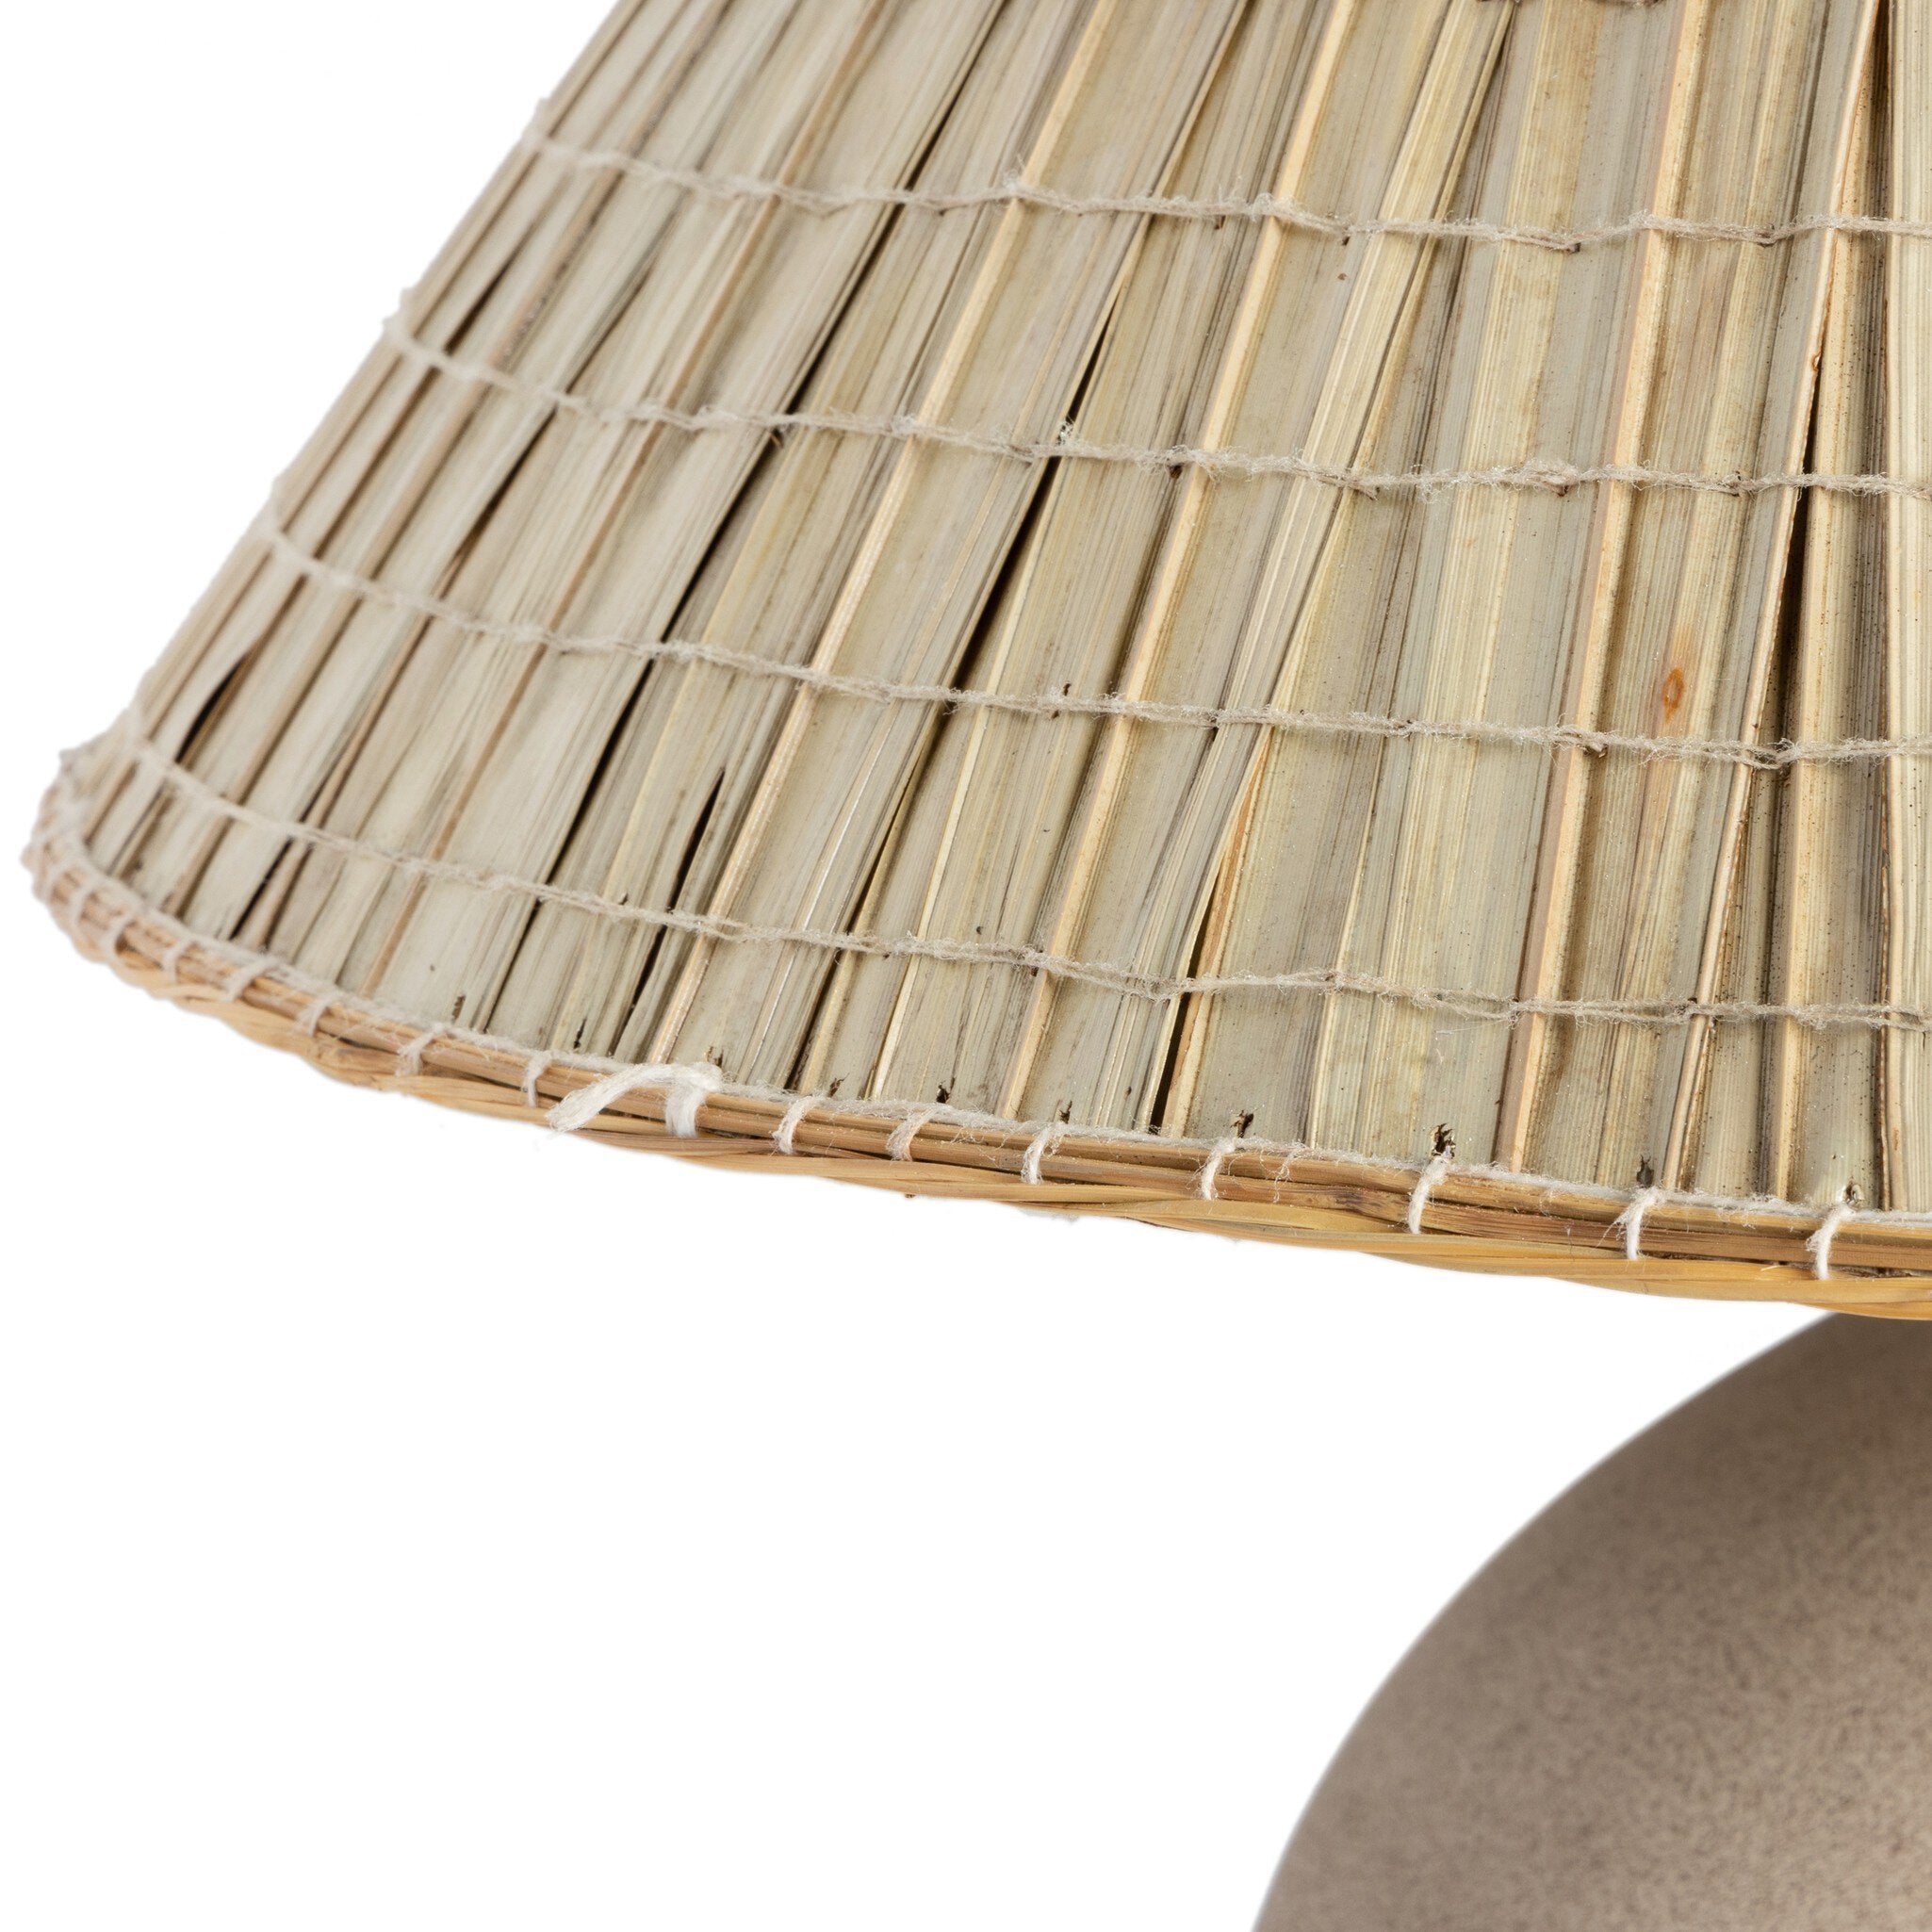 Cobb Table Lamp - Sand Porcelain